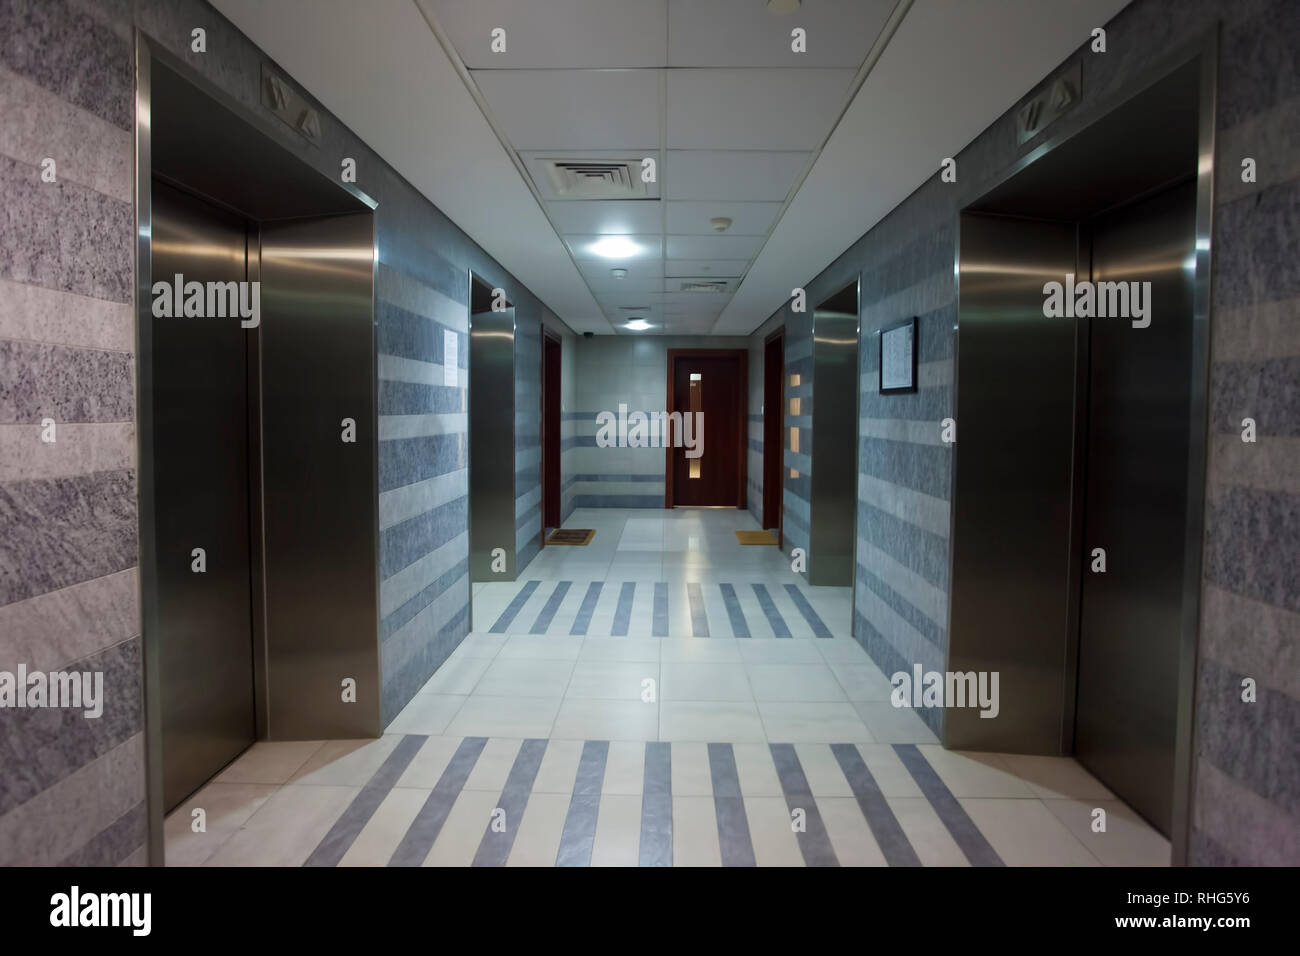 interior of elevator hall or corridor Stock Photo